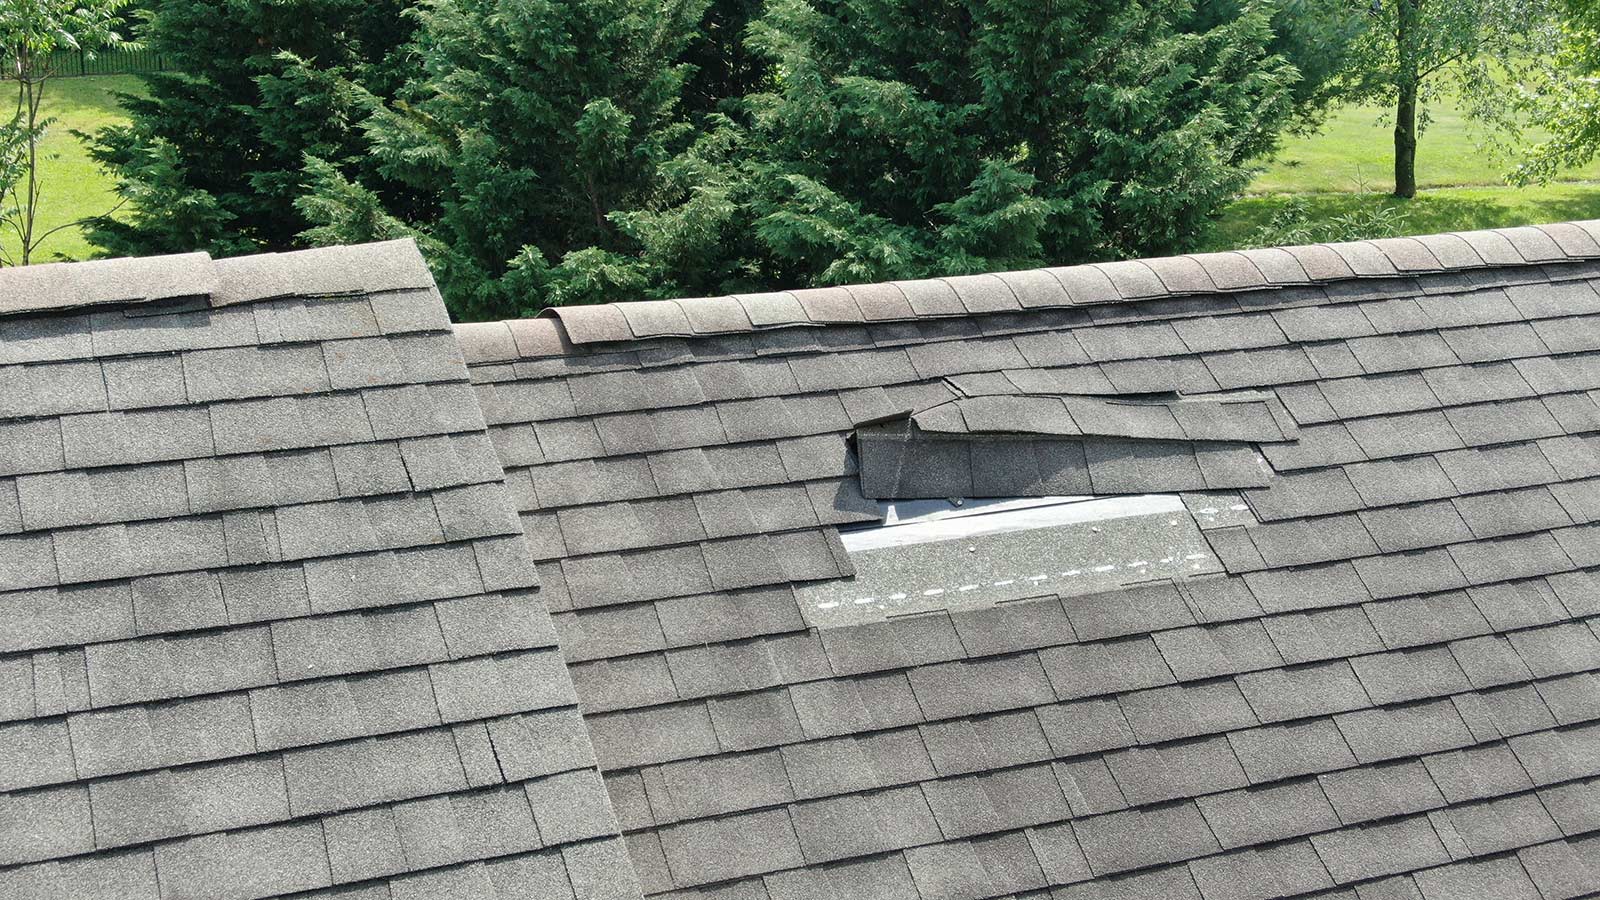 bg-roofing-storm-damage-shingles3